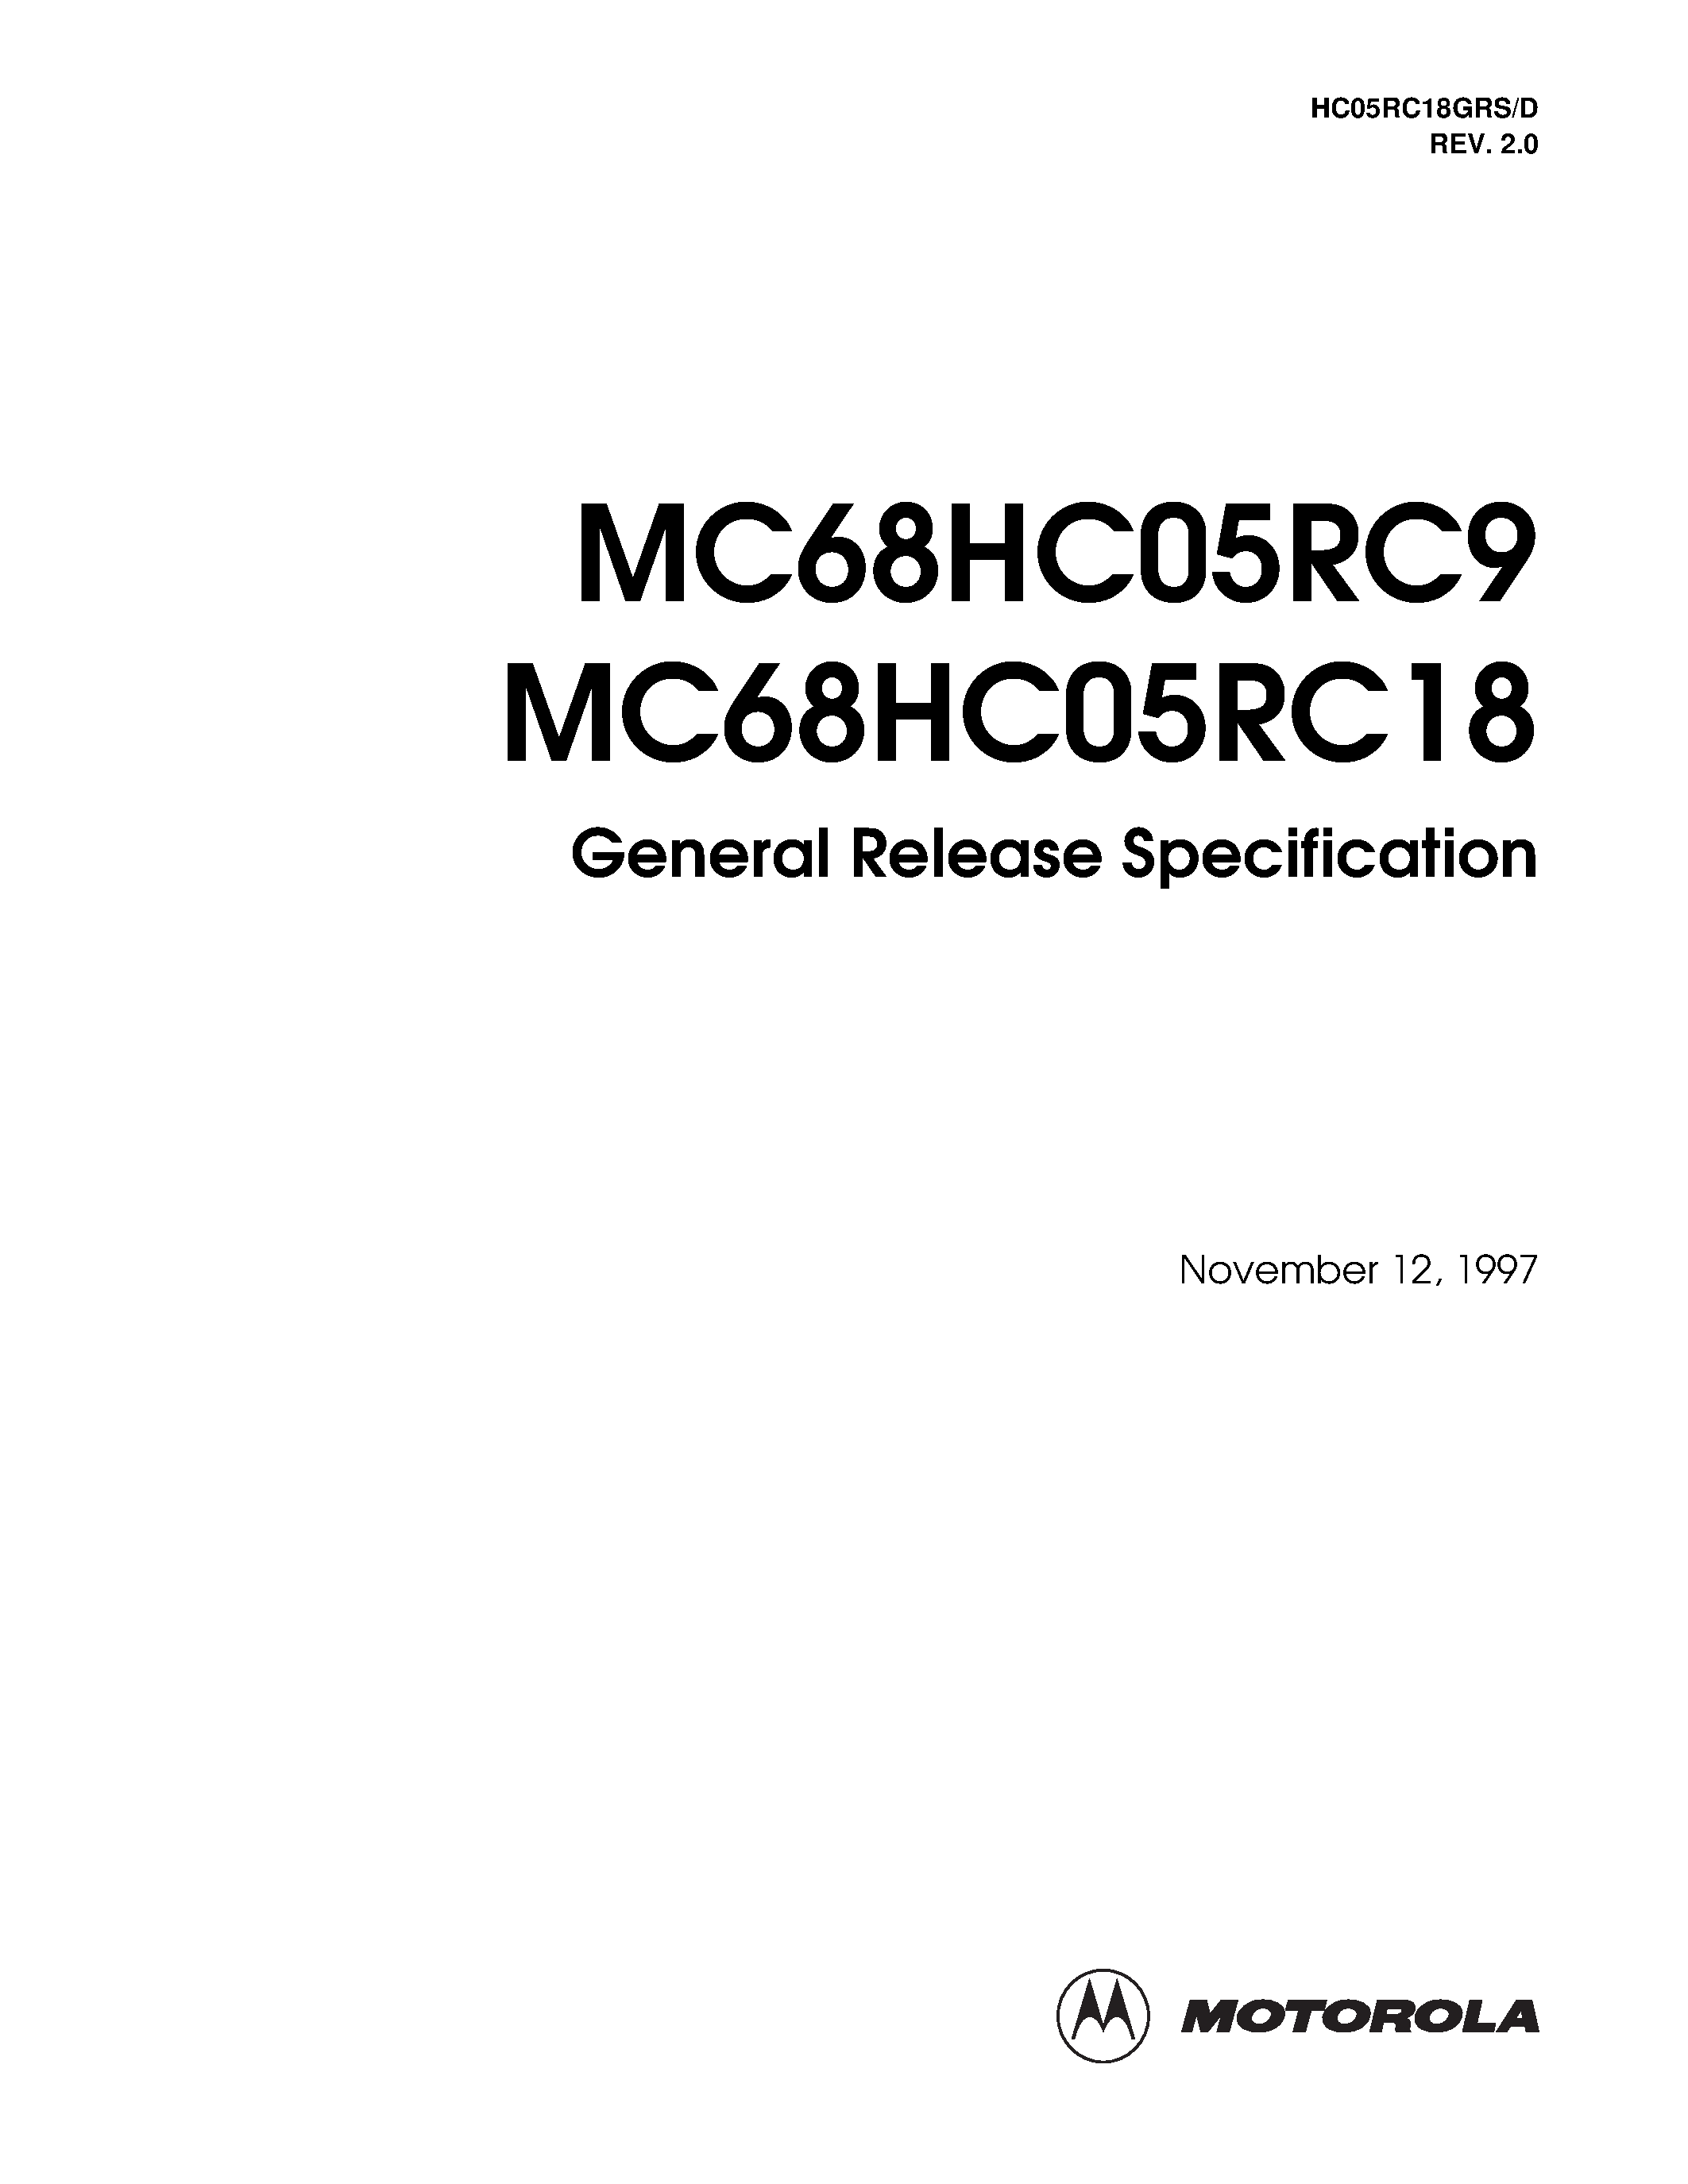 Даташит MC68HC05RC18 - (MC68HC05RC9 / MC68HC05RC18) Microcontroller страница 1